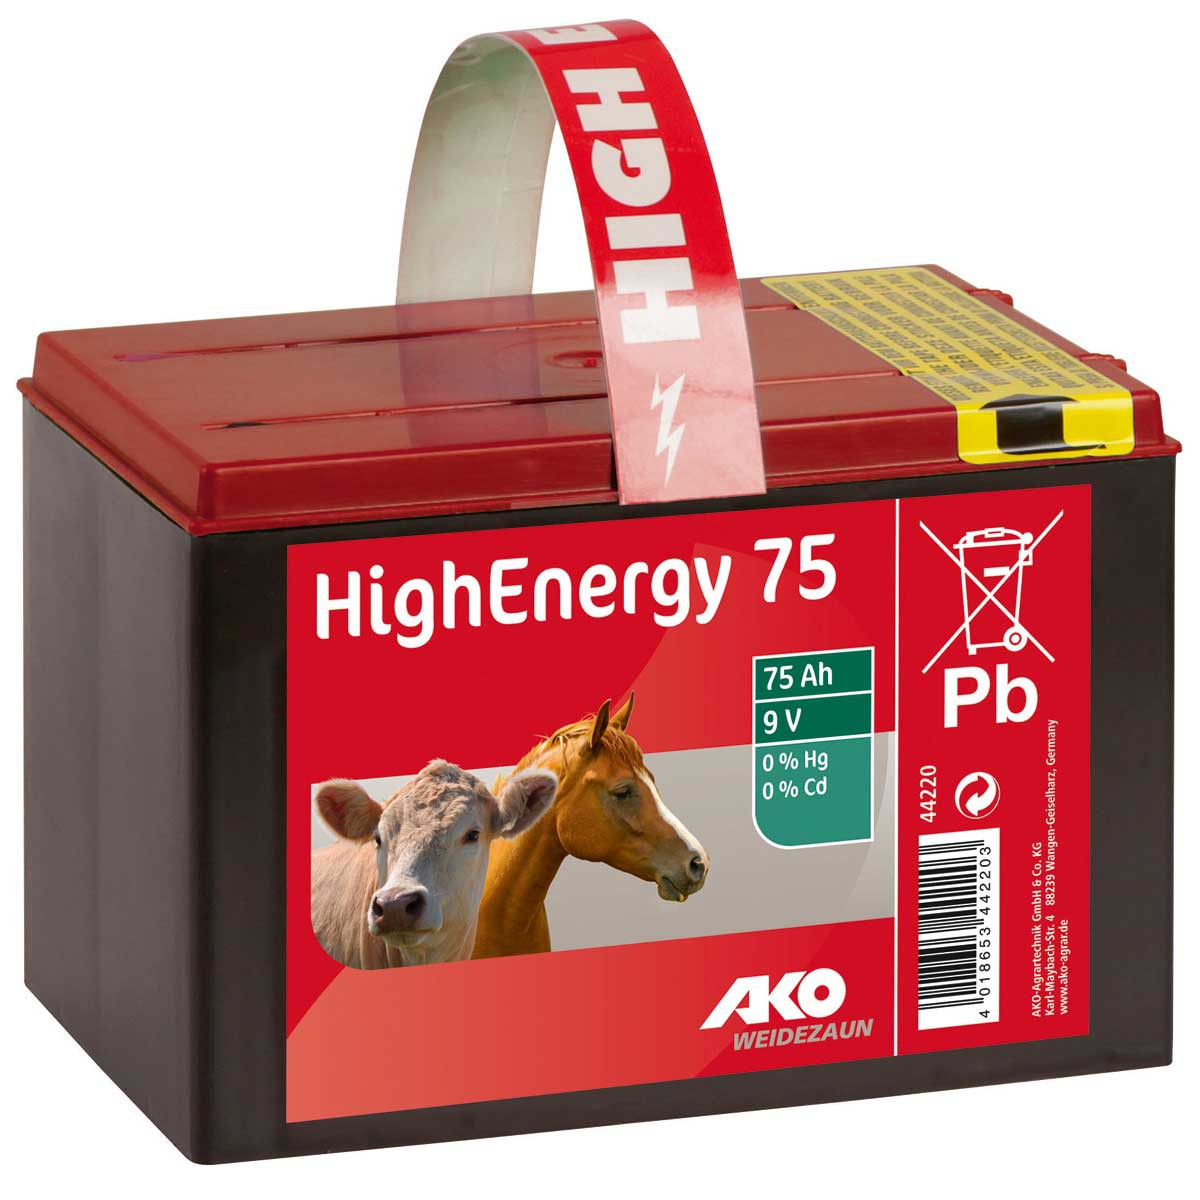 AKO HighEnergy Saline dry battery 9V 75 Ah